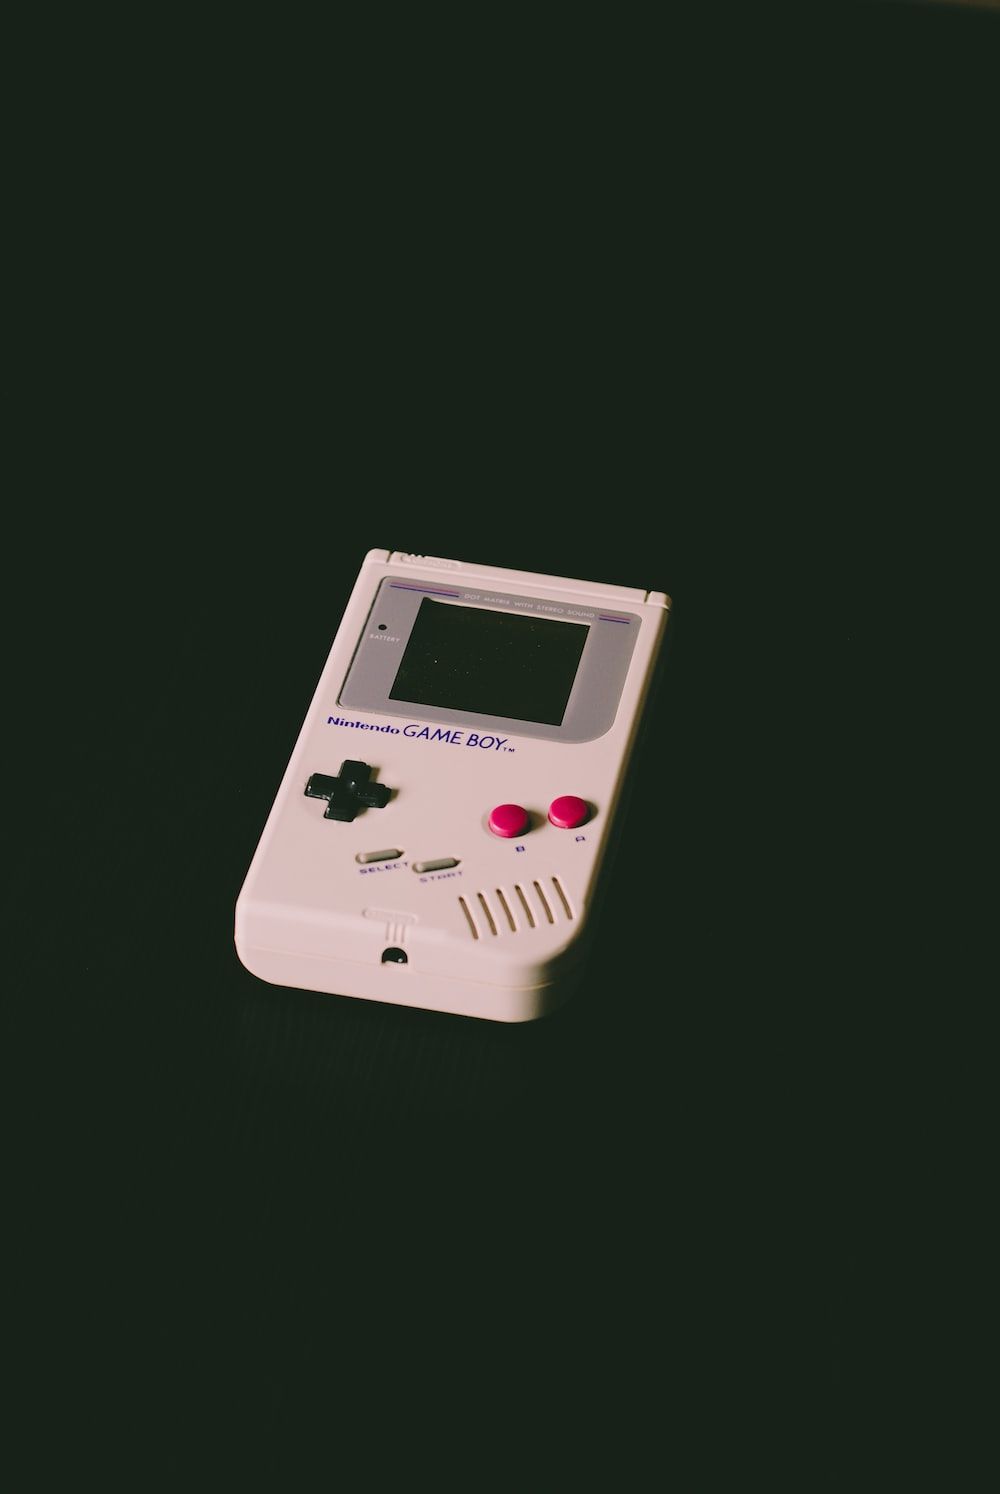 turned off Nintendo Game Boy photo